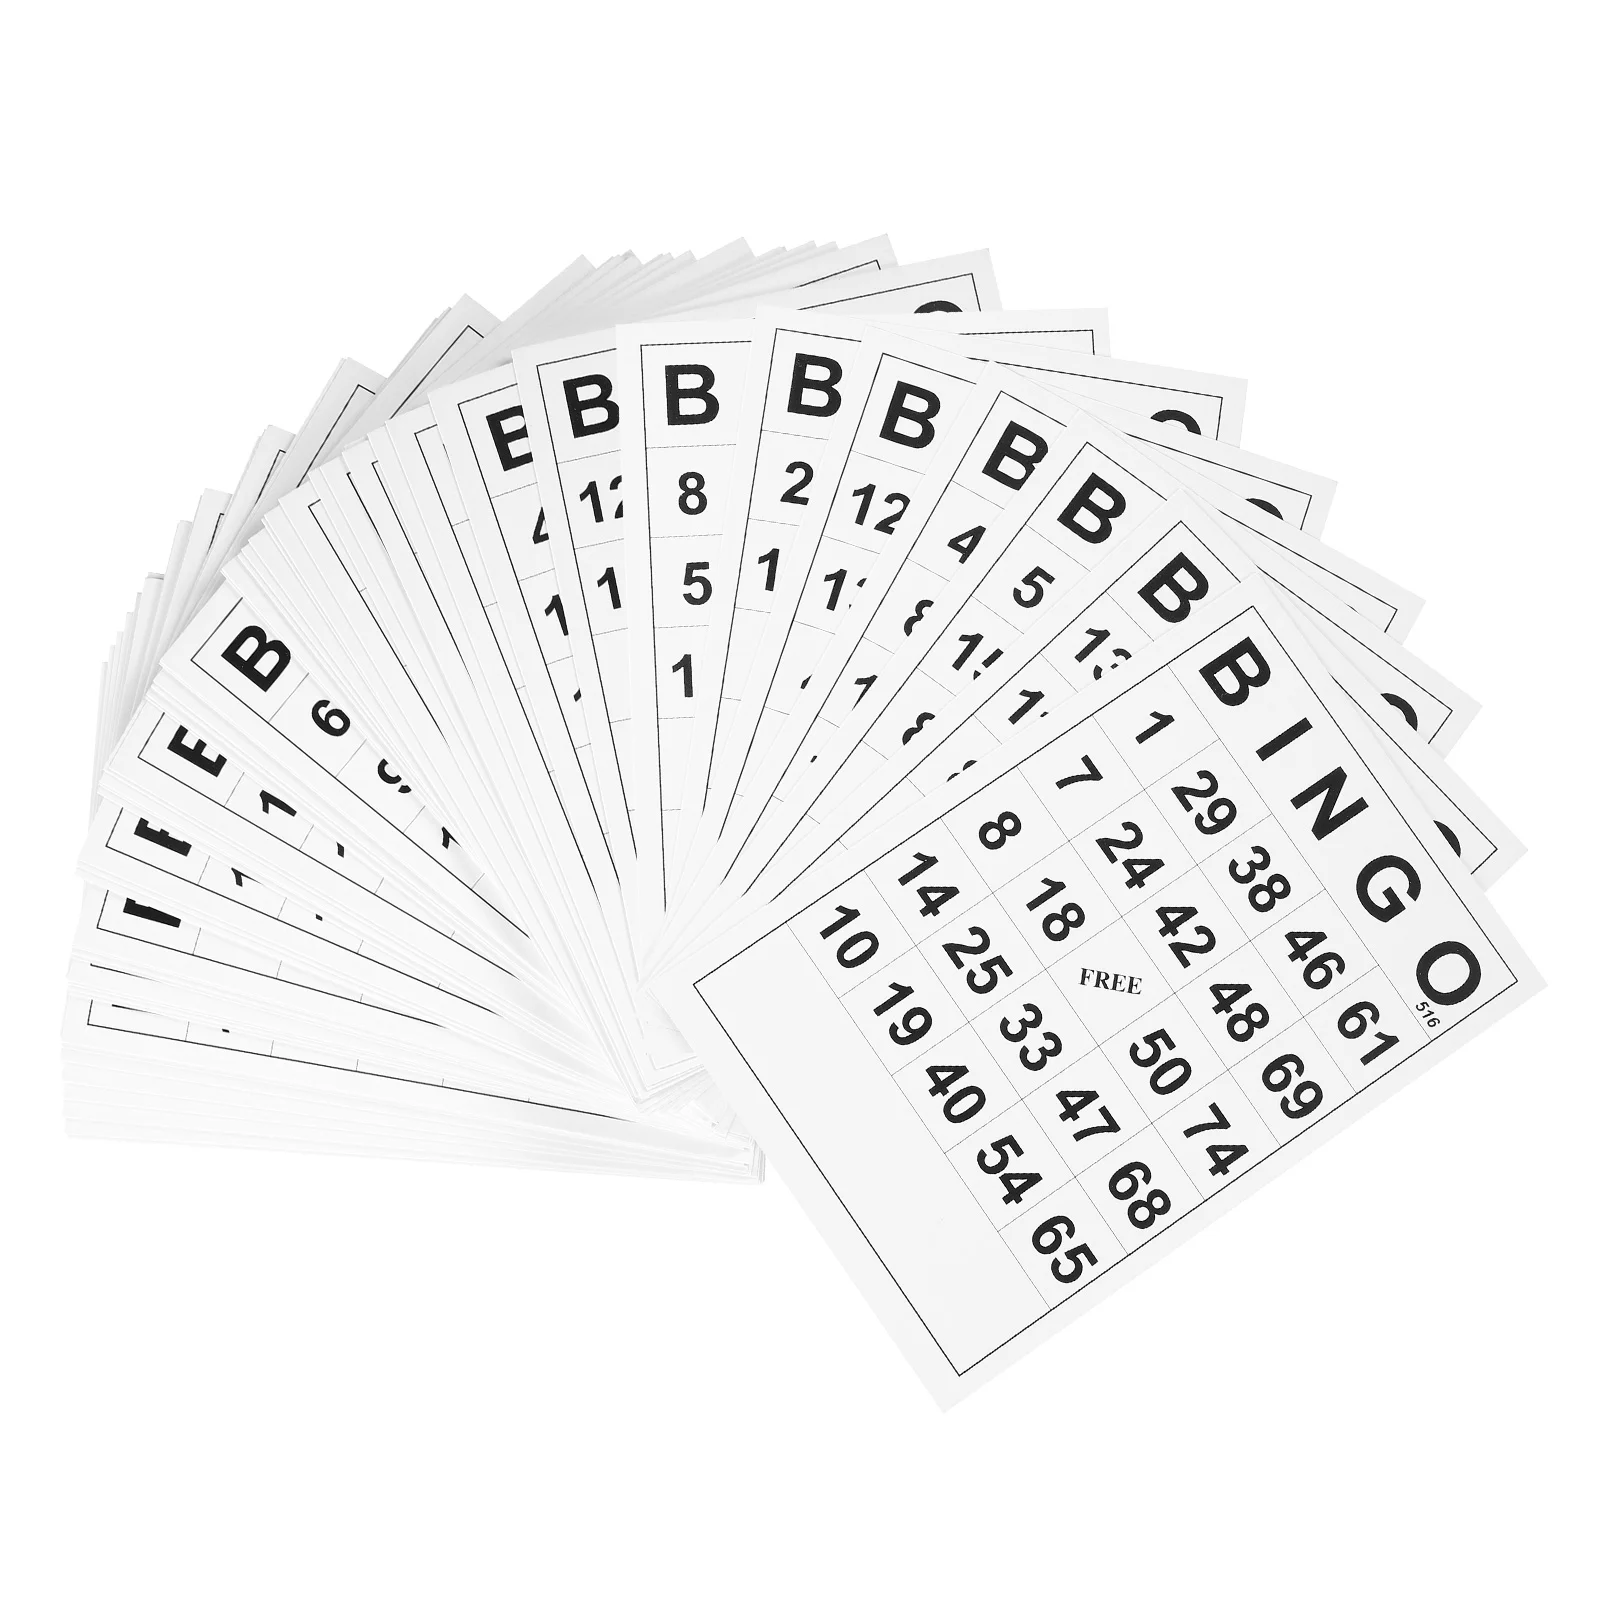 

Bingo Card Bingo Game Cards With Unique Numbers Family Bingo Game Accessories For Fun Intellectual Development (White)